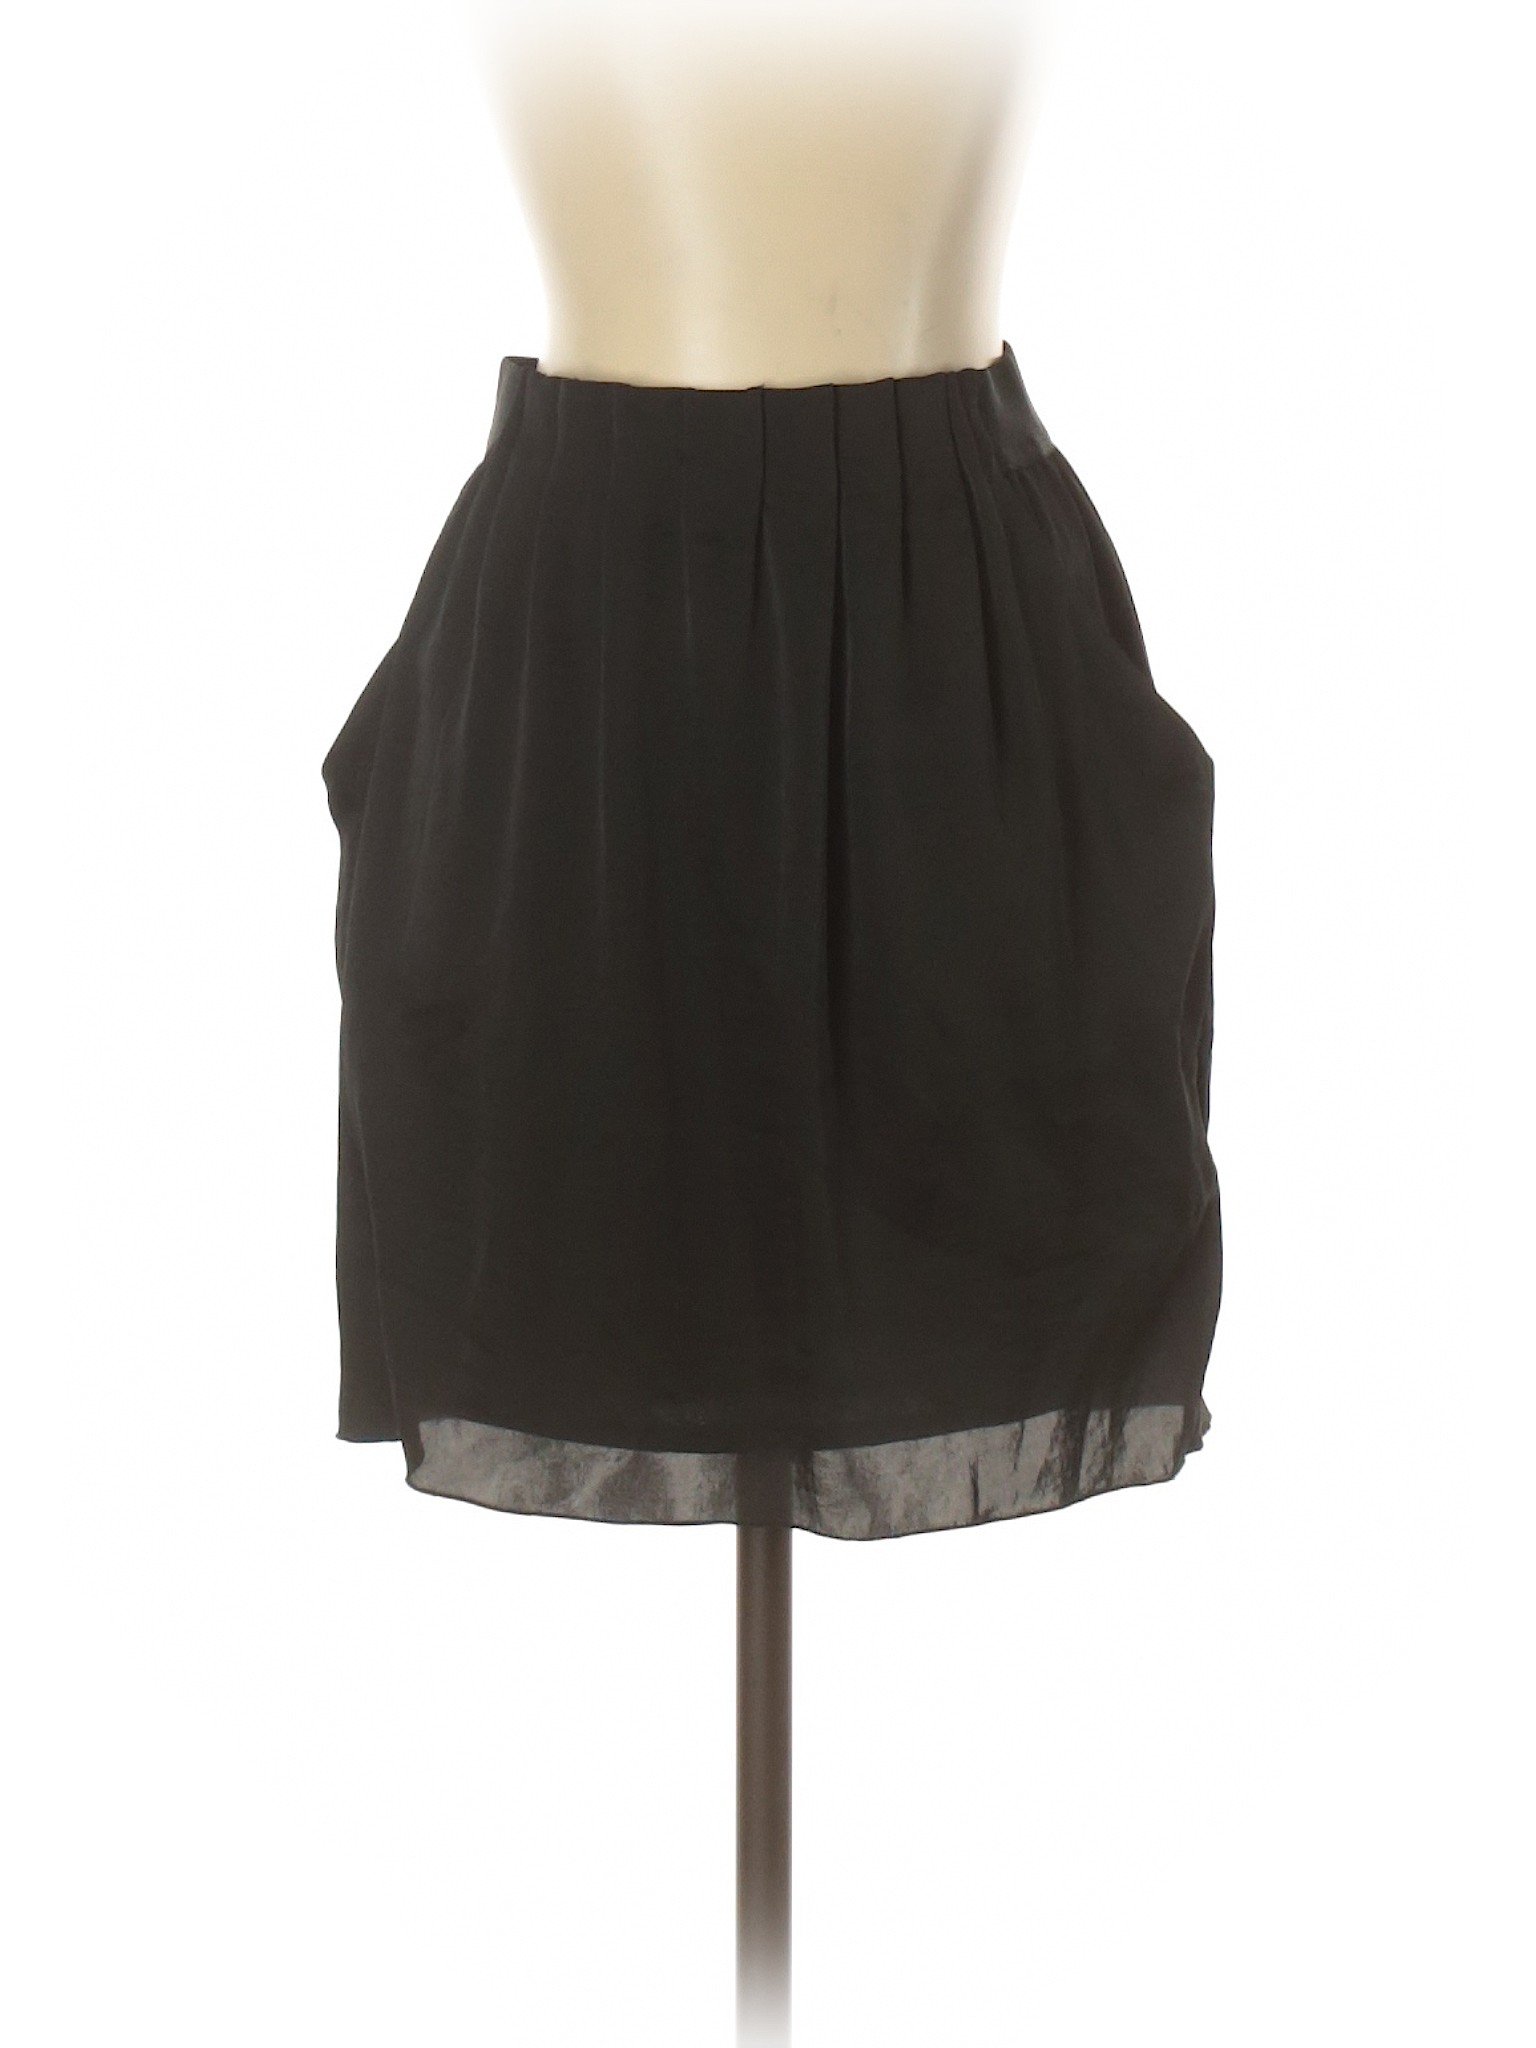 Uniqlo Women Black Casual Skirt XS | eBay